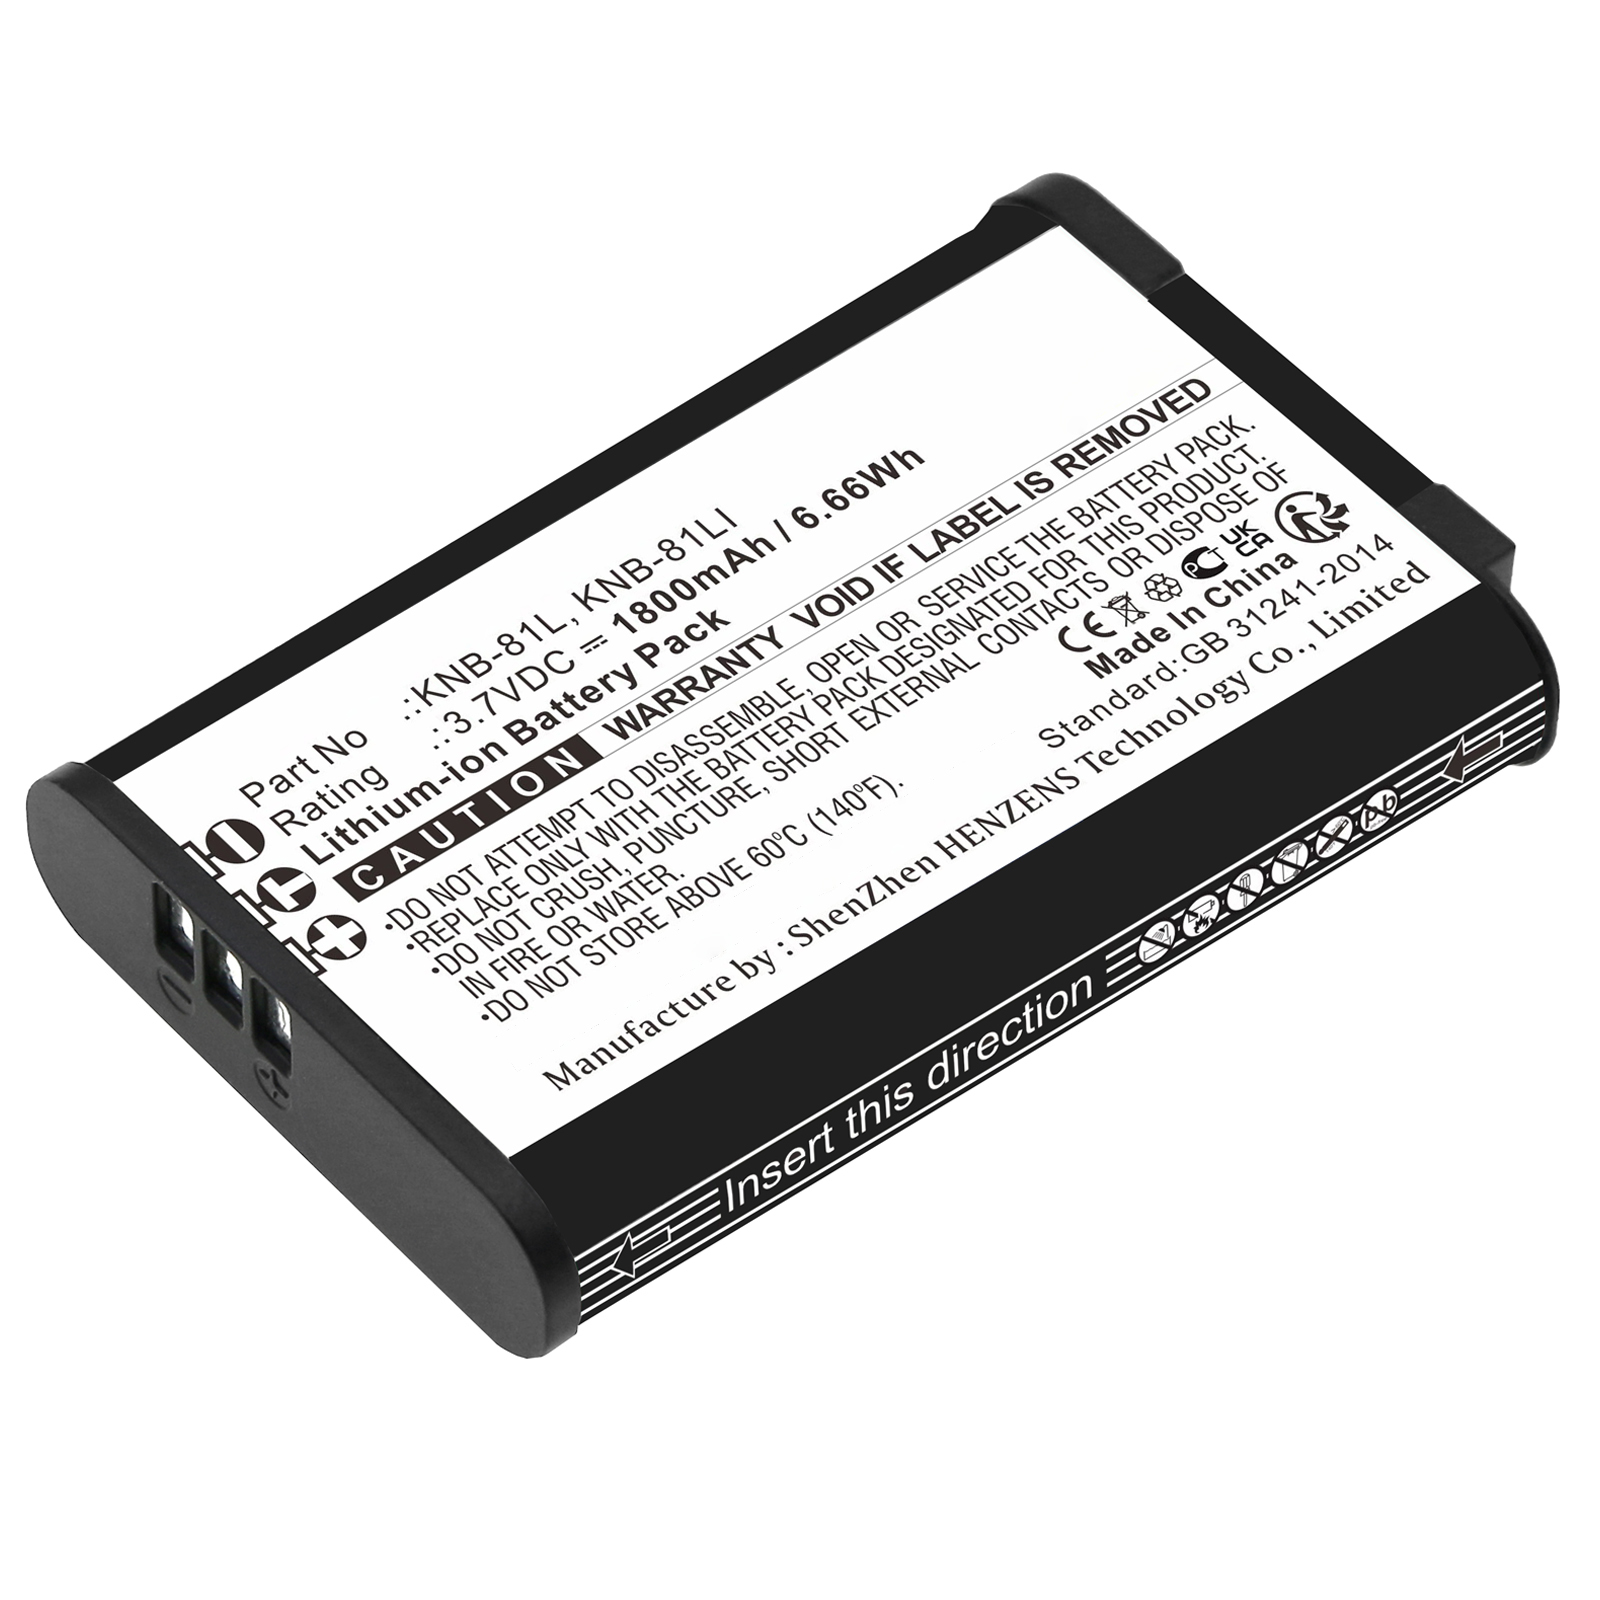 Batteries for Kenwood2-Way Radio